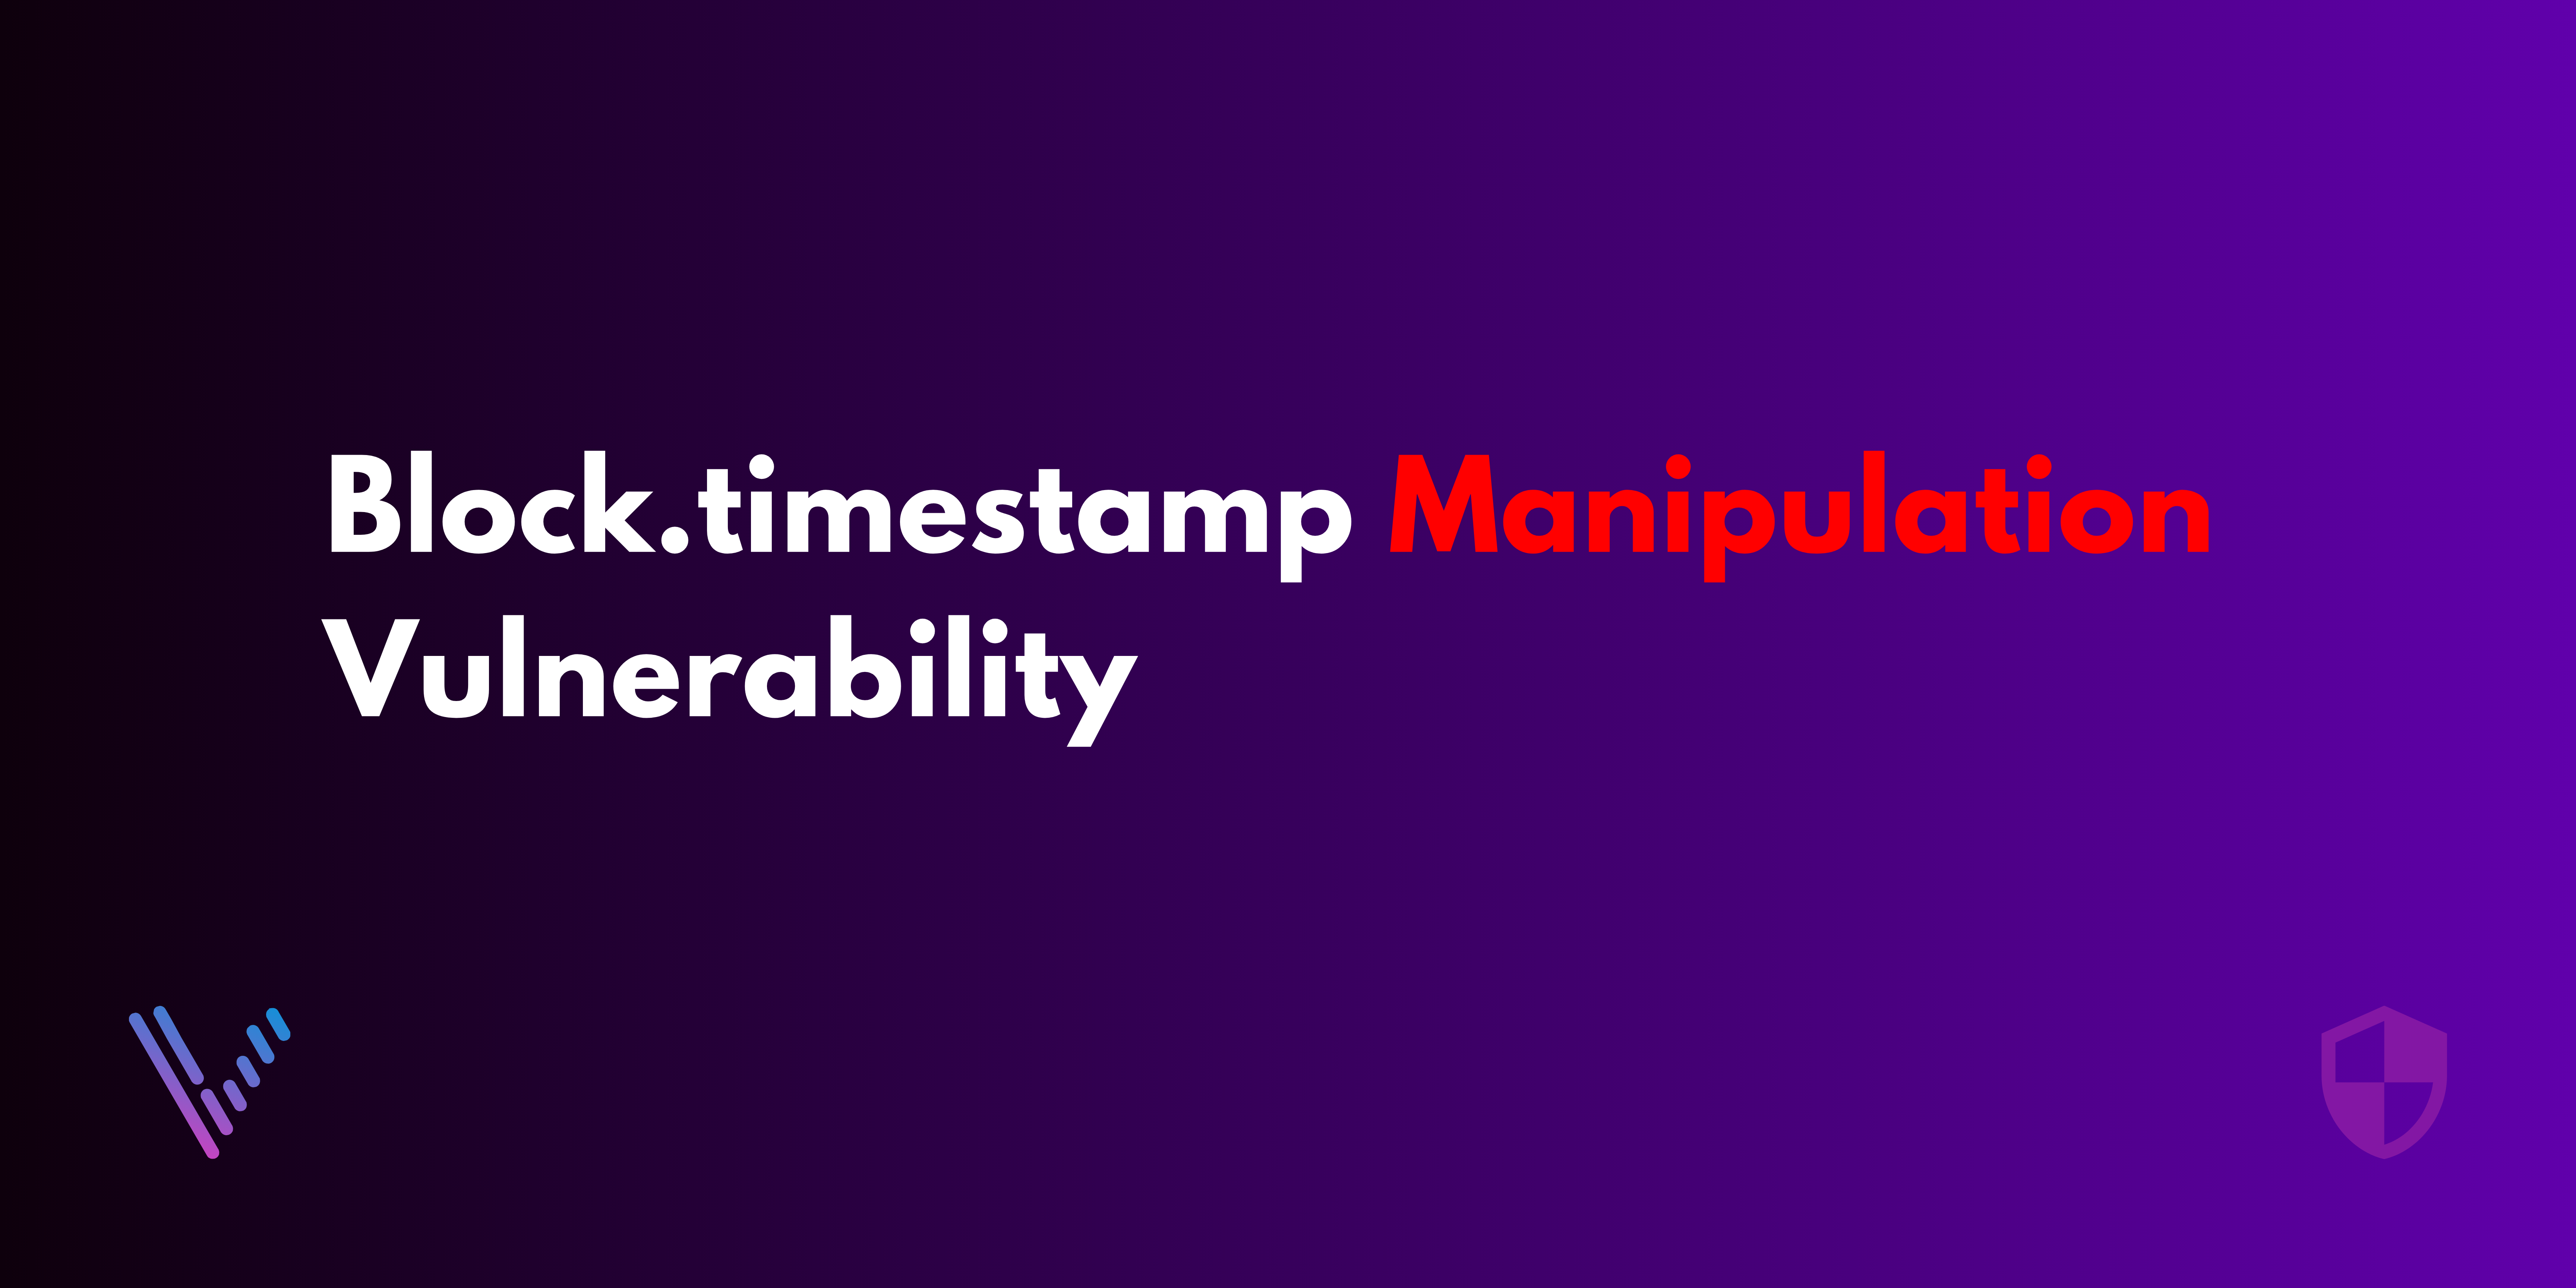 Addressing the Block.timestamp Manipulation Vulnerability